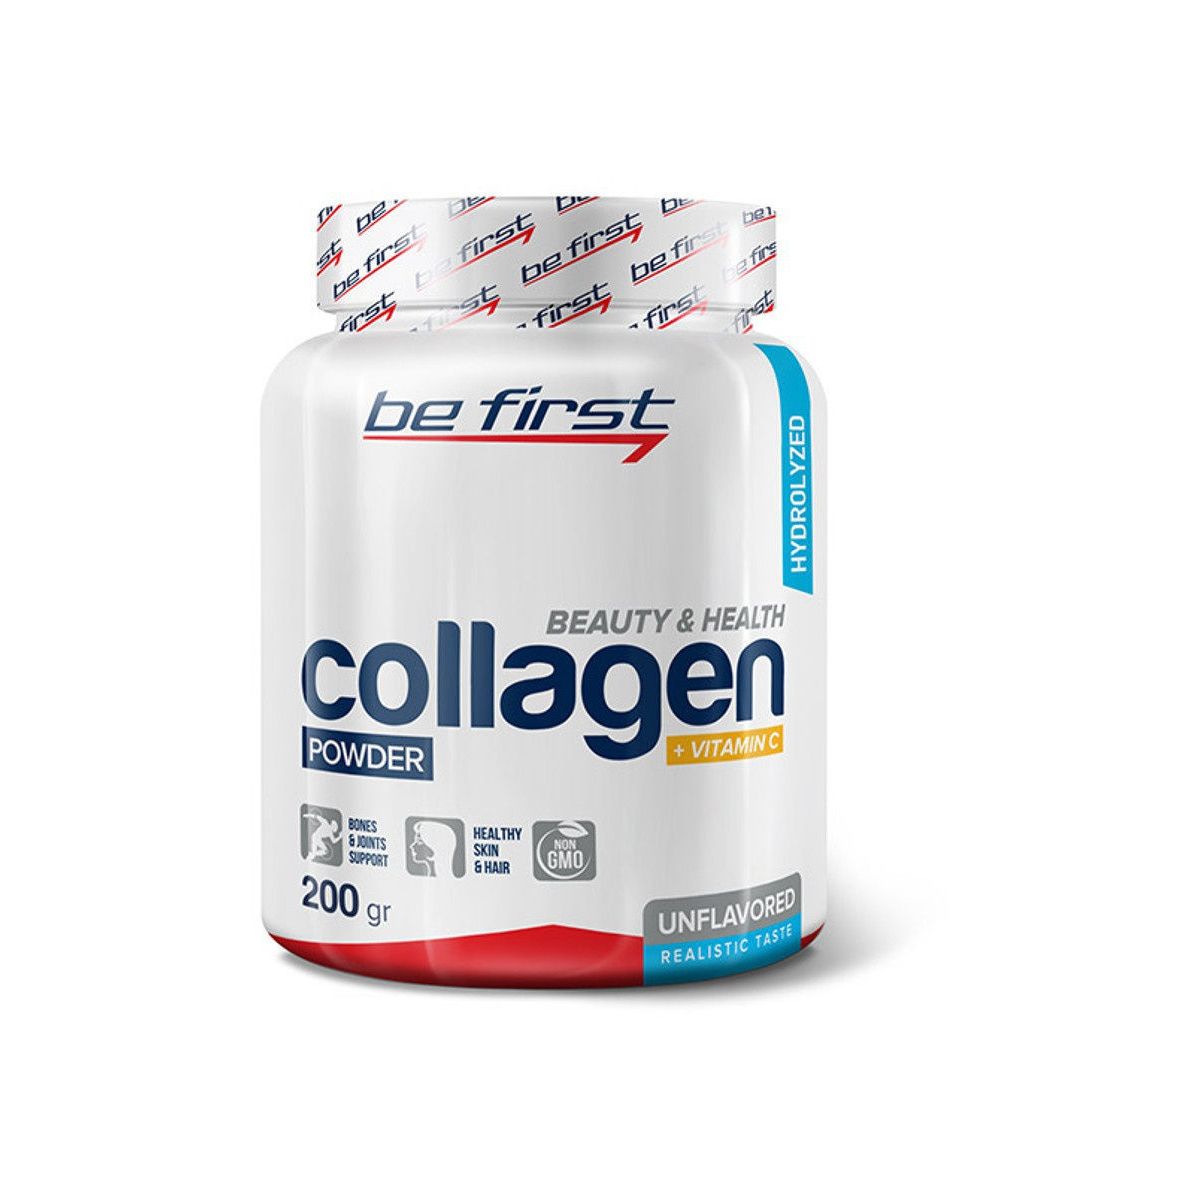 Коллаген с витамином с купить в аптеке. Коллаген би Ферст. Be first Collagen Powder + c 200 gr. Collagen Powder 200 гр 2sn. Коллаген be first Collagen + Vitamin c.